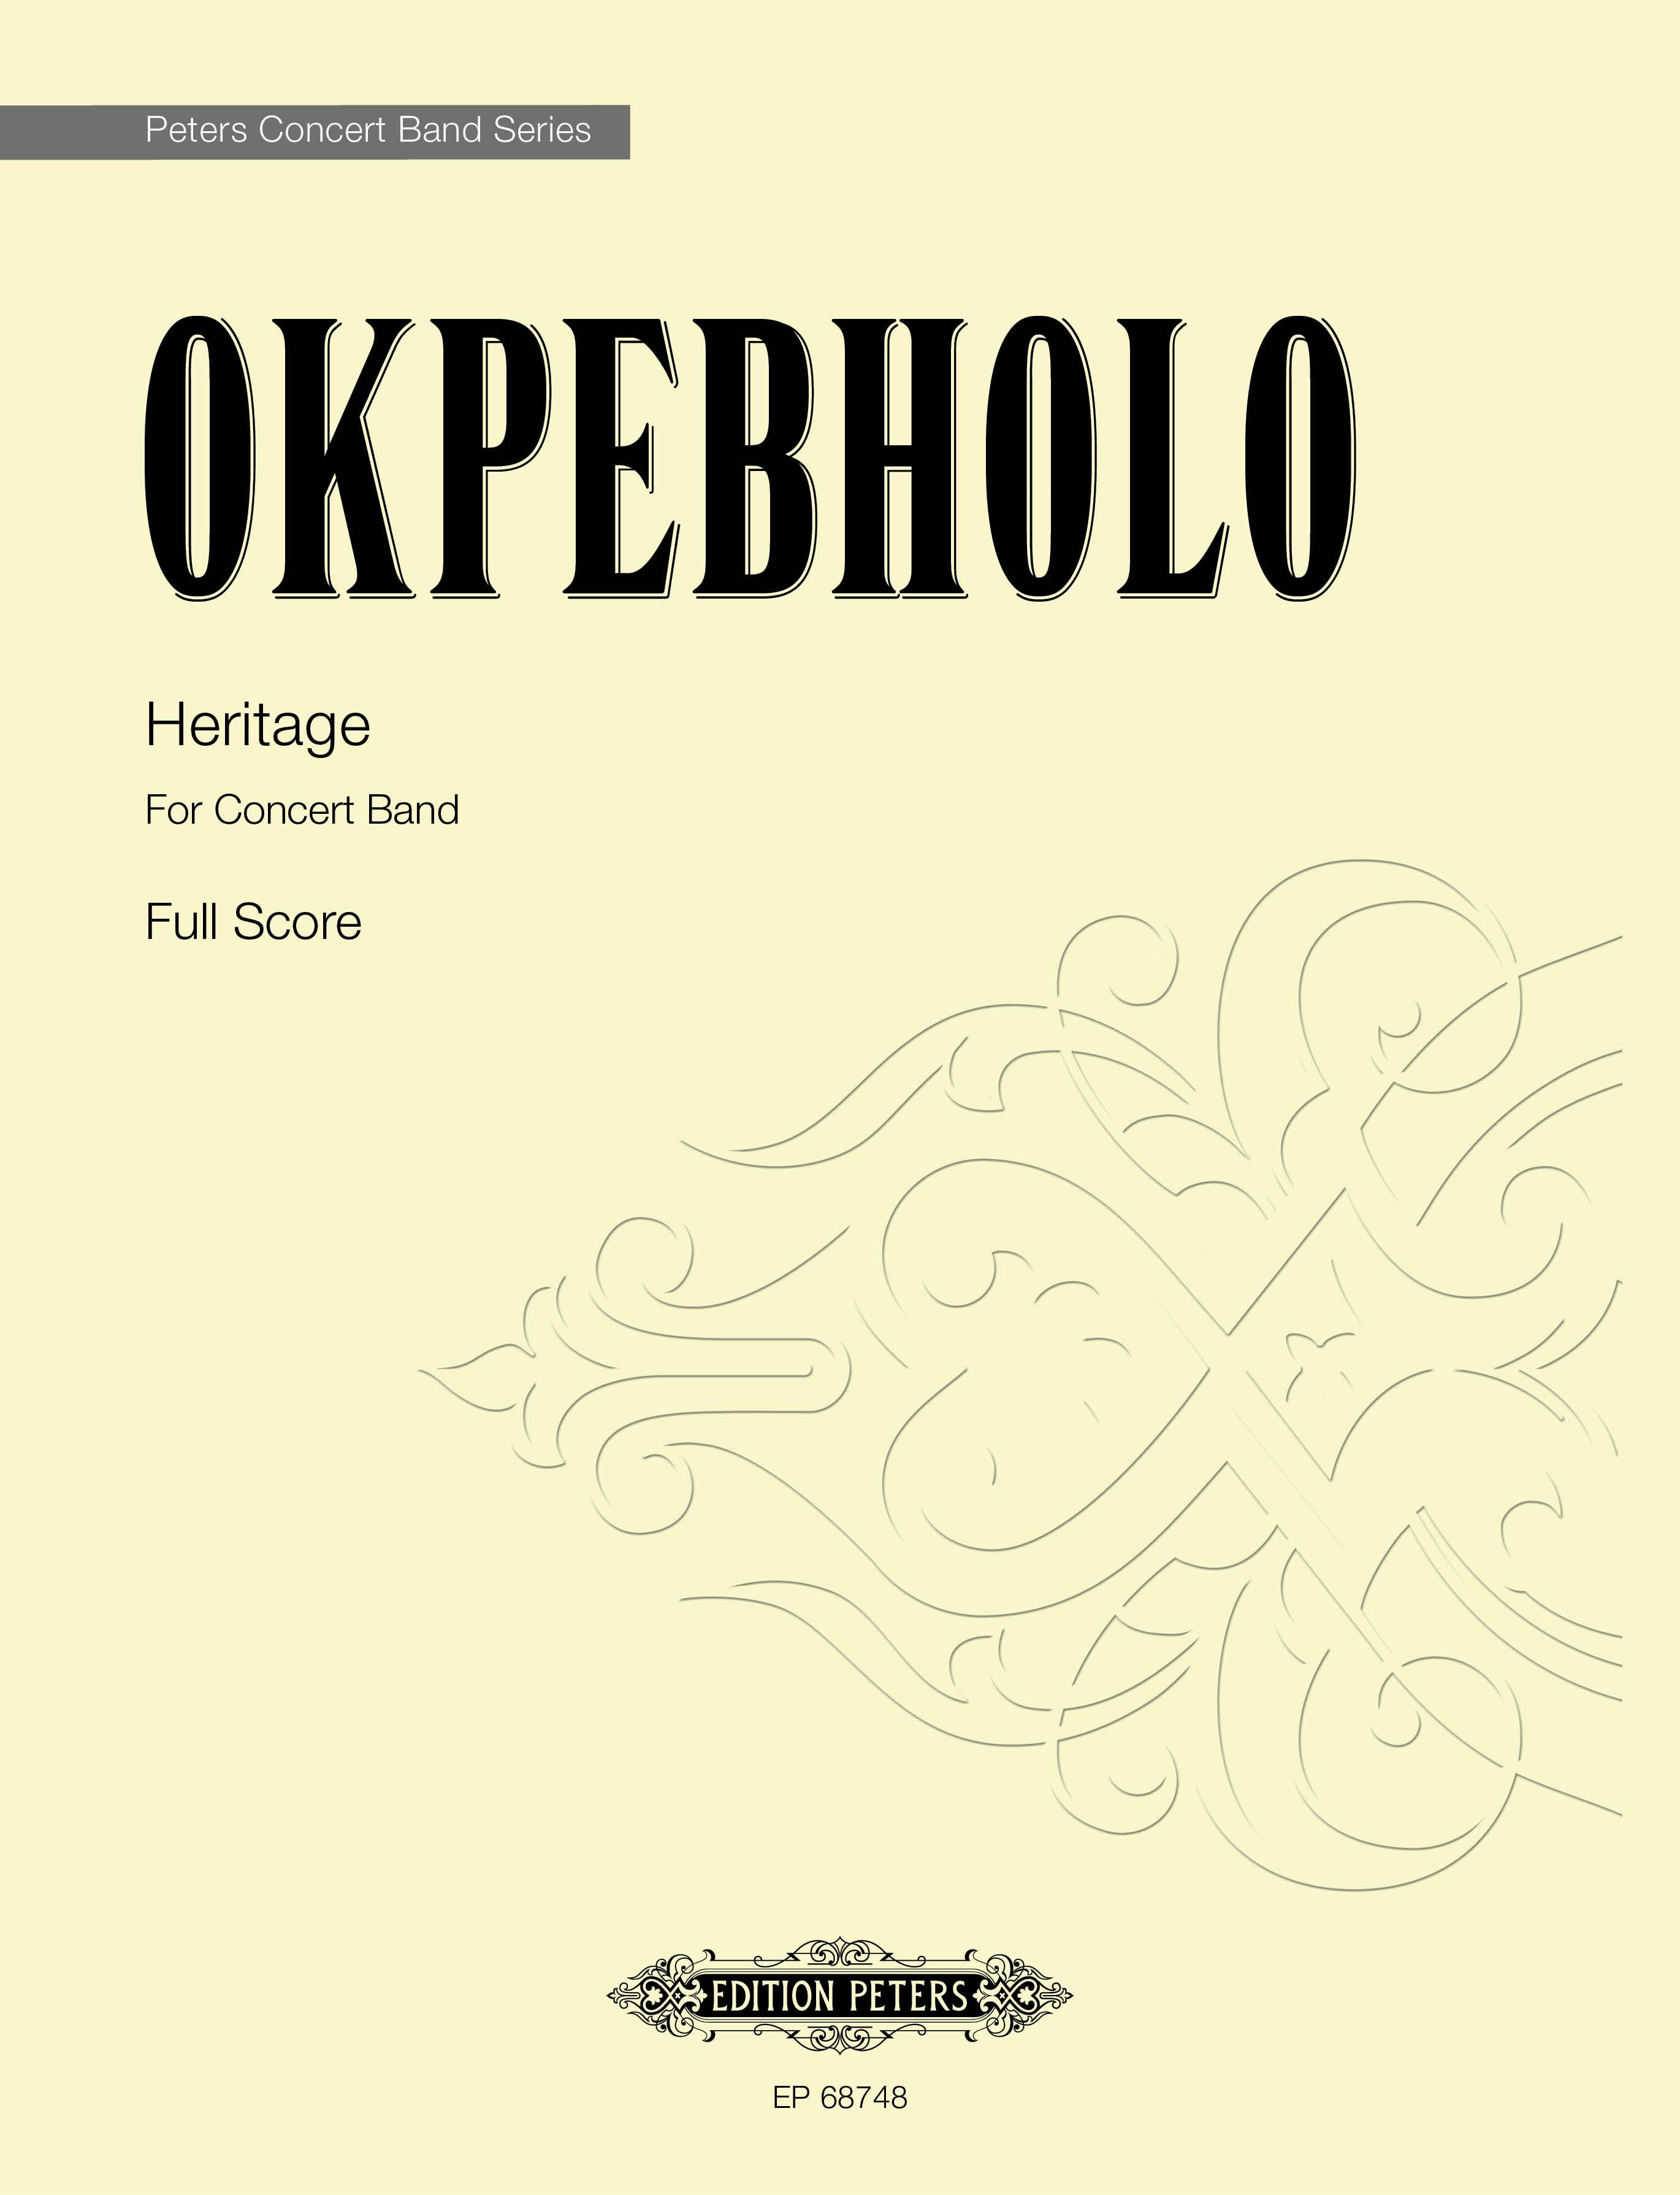 Okpebholo Heritage Concert Band Full Score Sheet Music